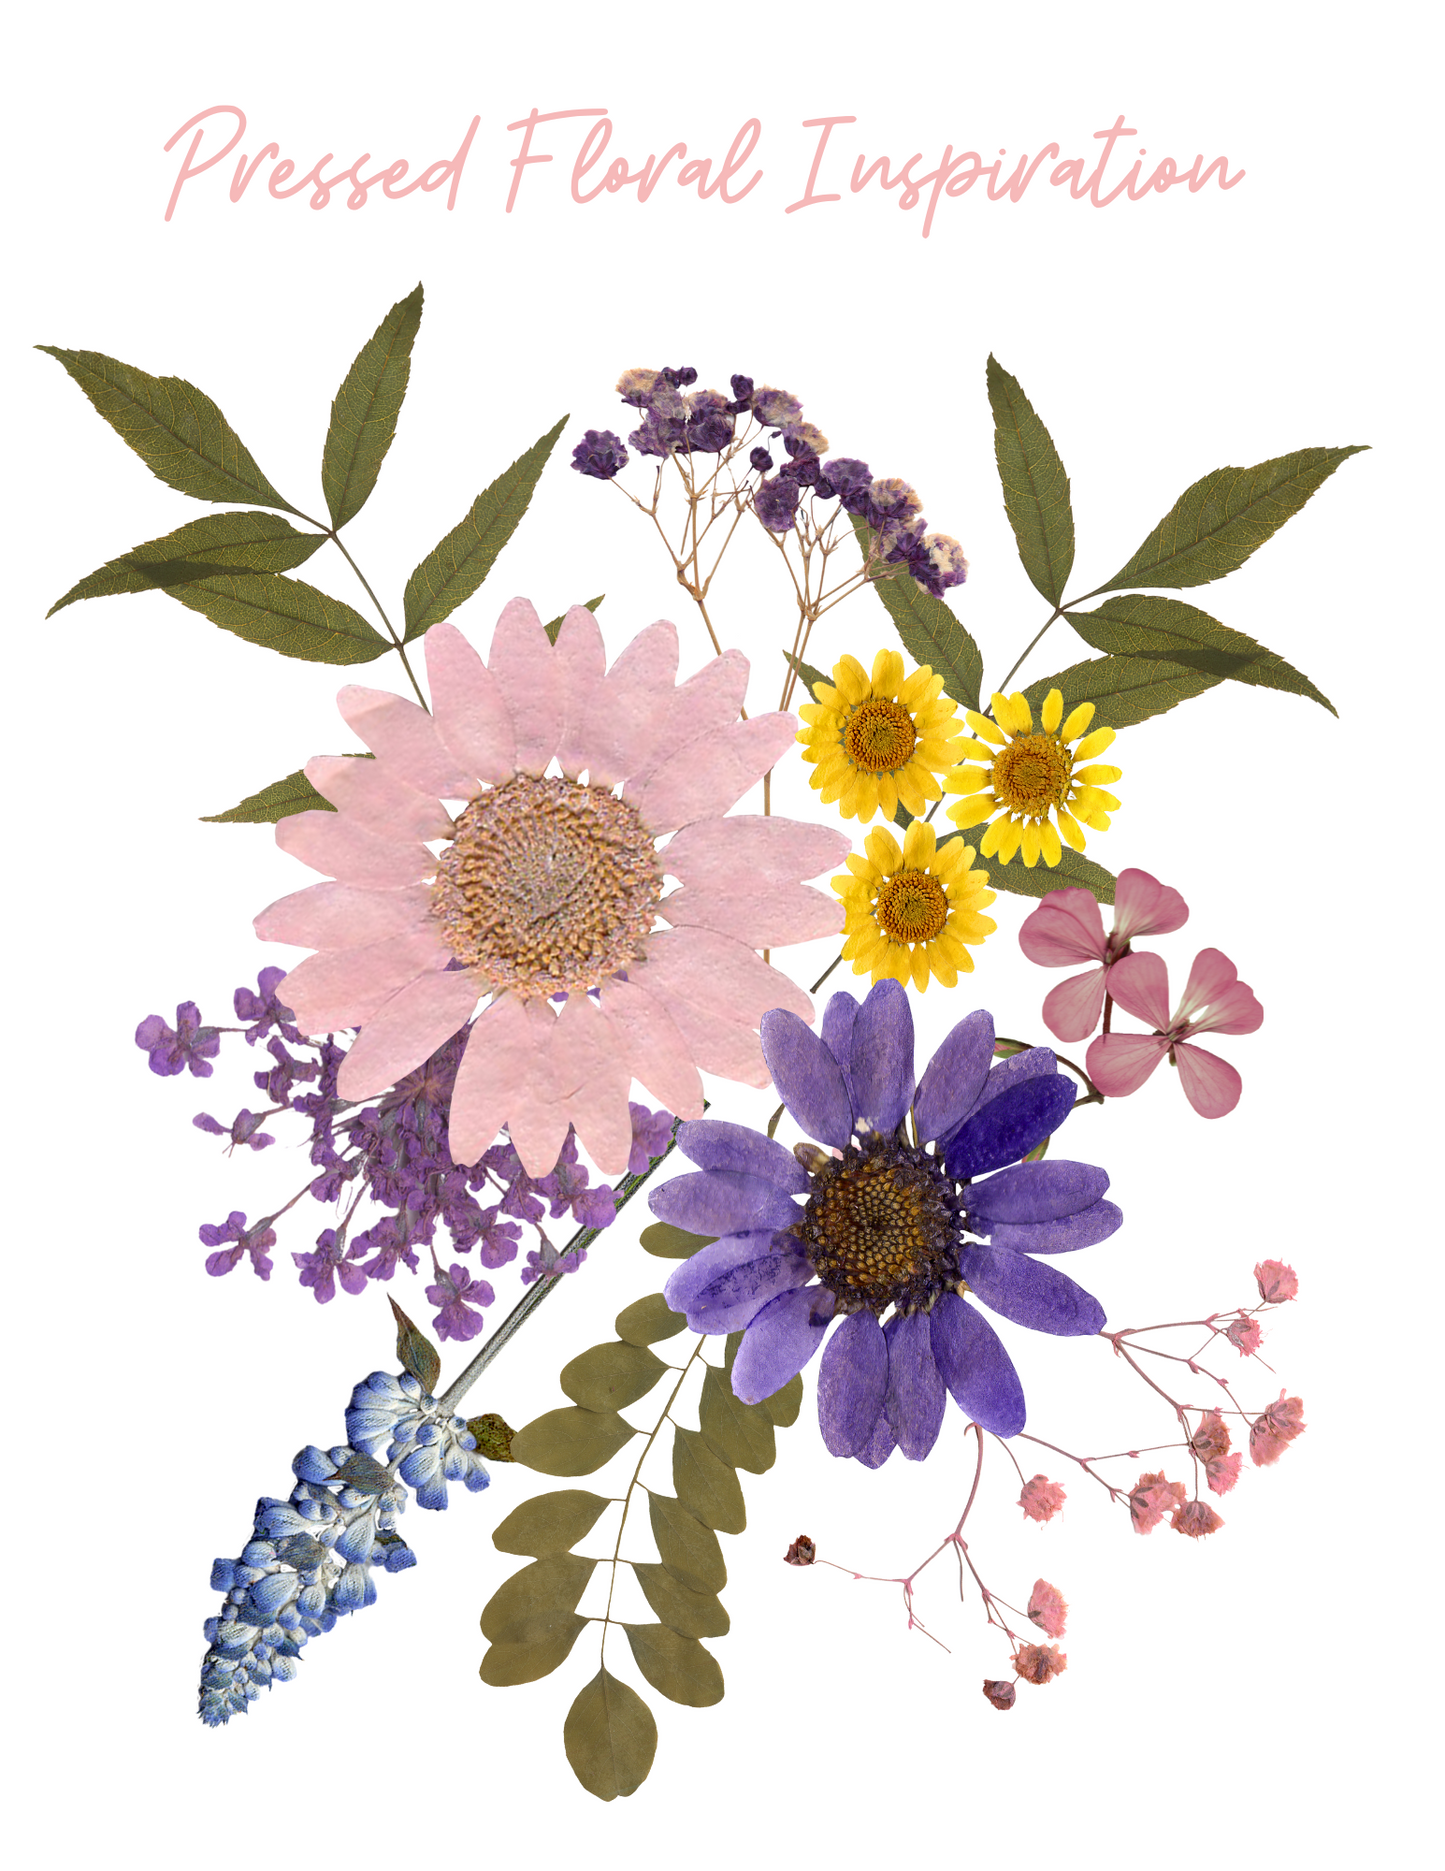 Pressed Floral Inspired Virtual Watercolor Workshop